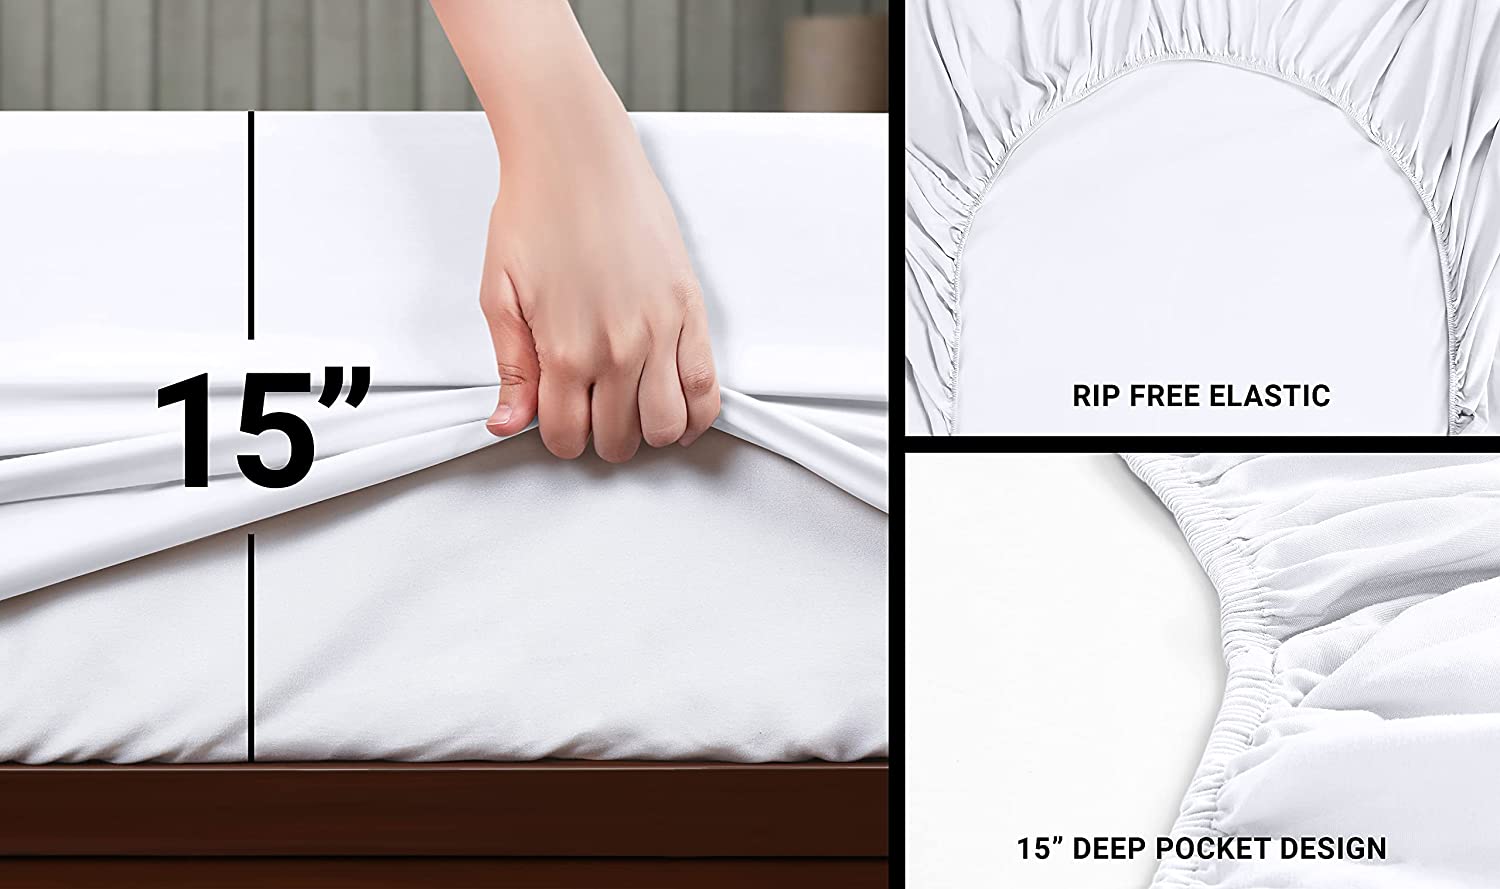 Utopia Bedding Queen Bed Sheets Set - 4 Piece Bedding - Brushed Microfiber  